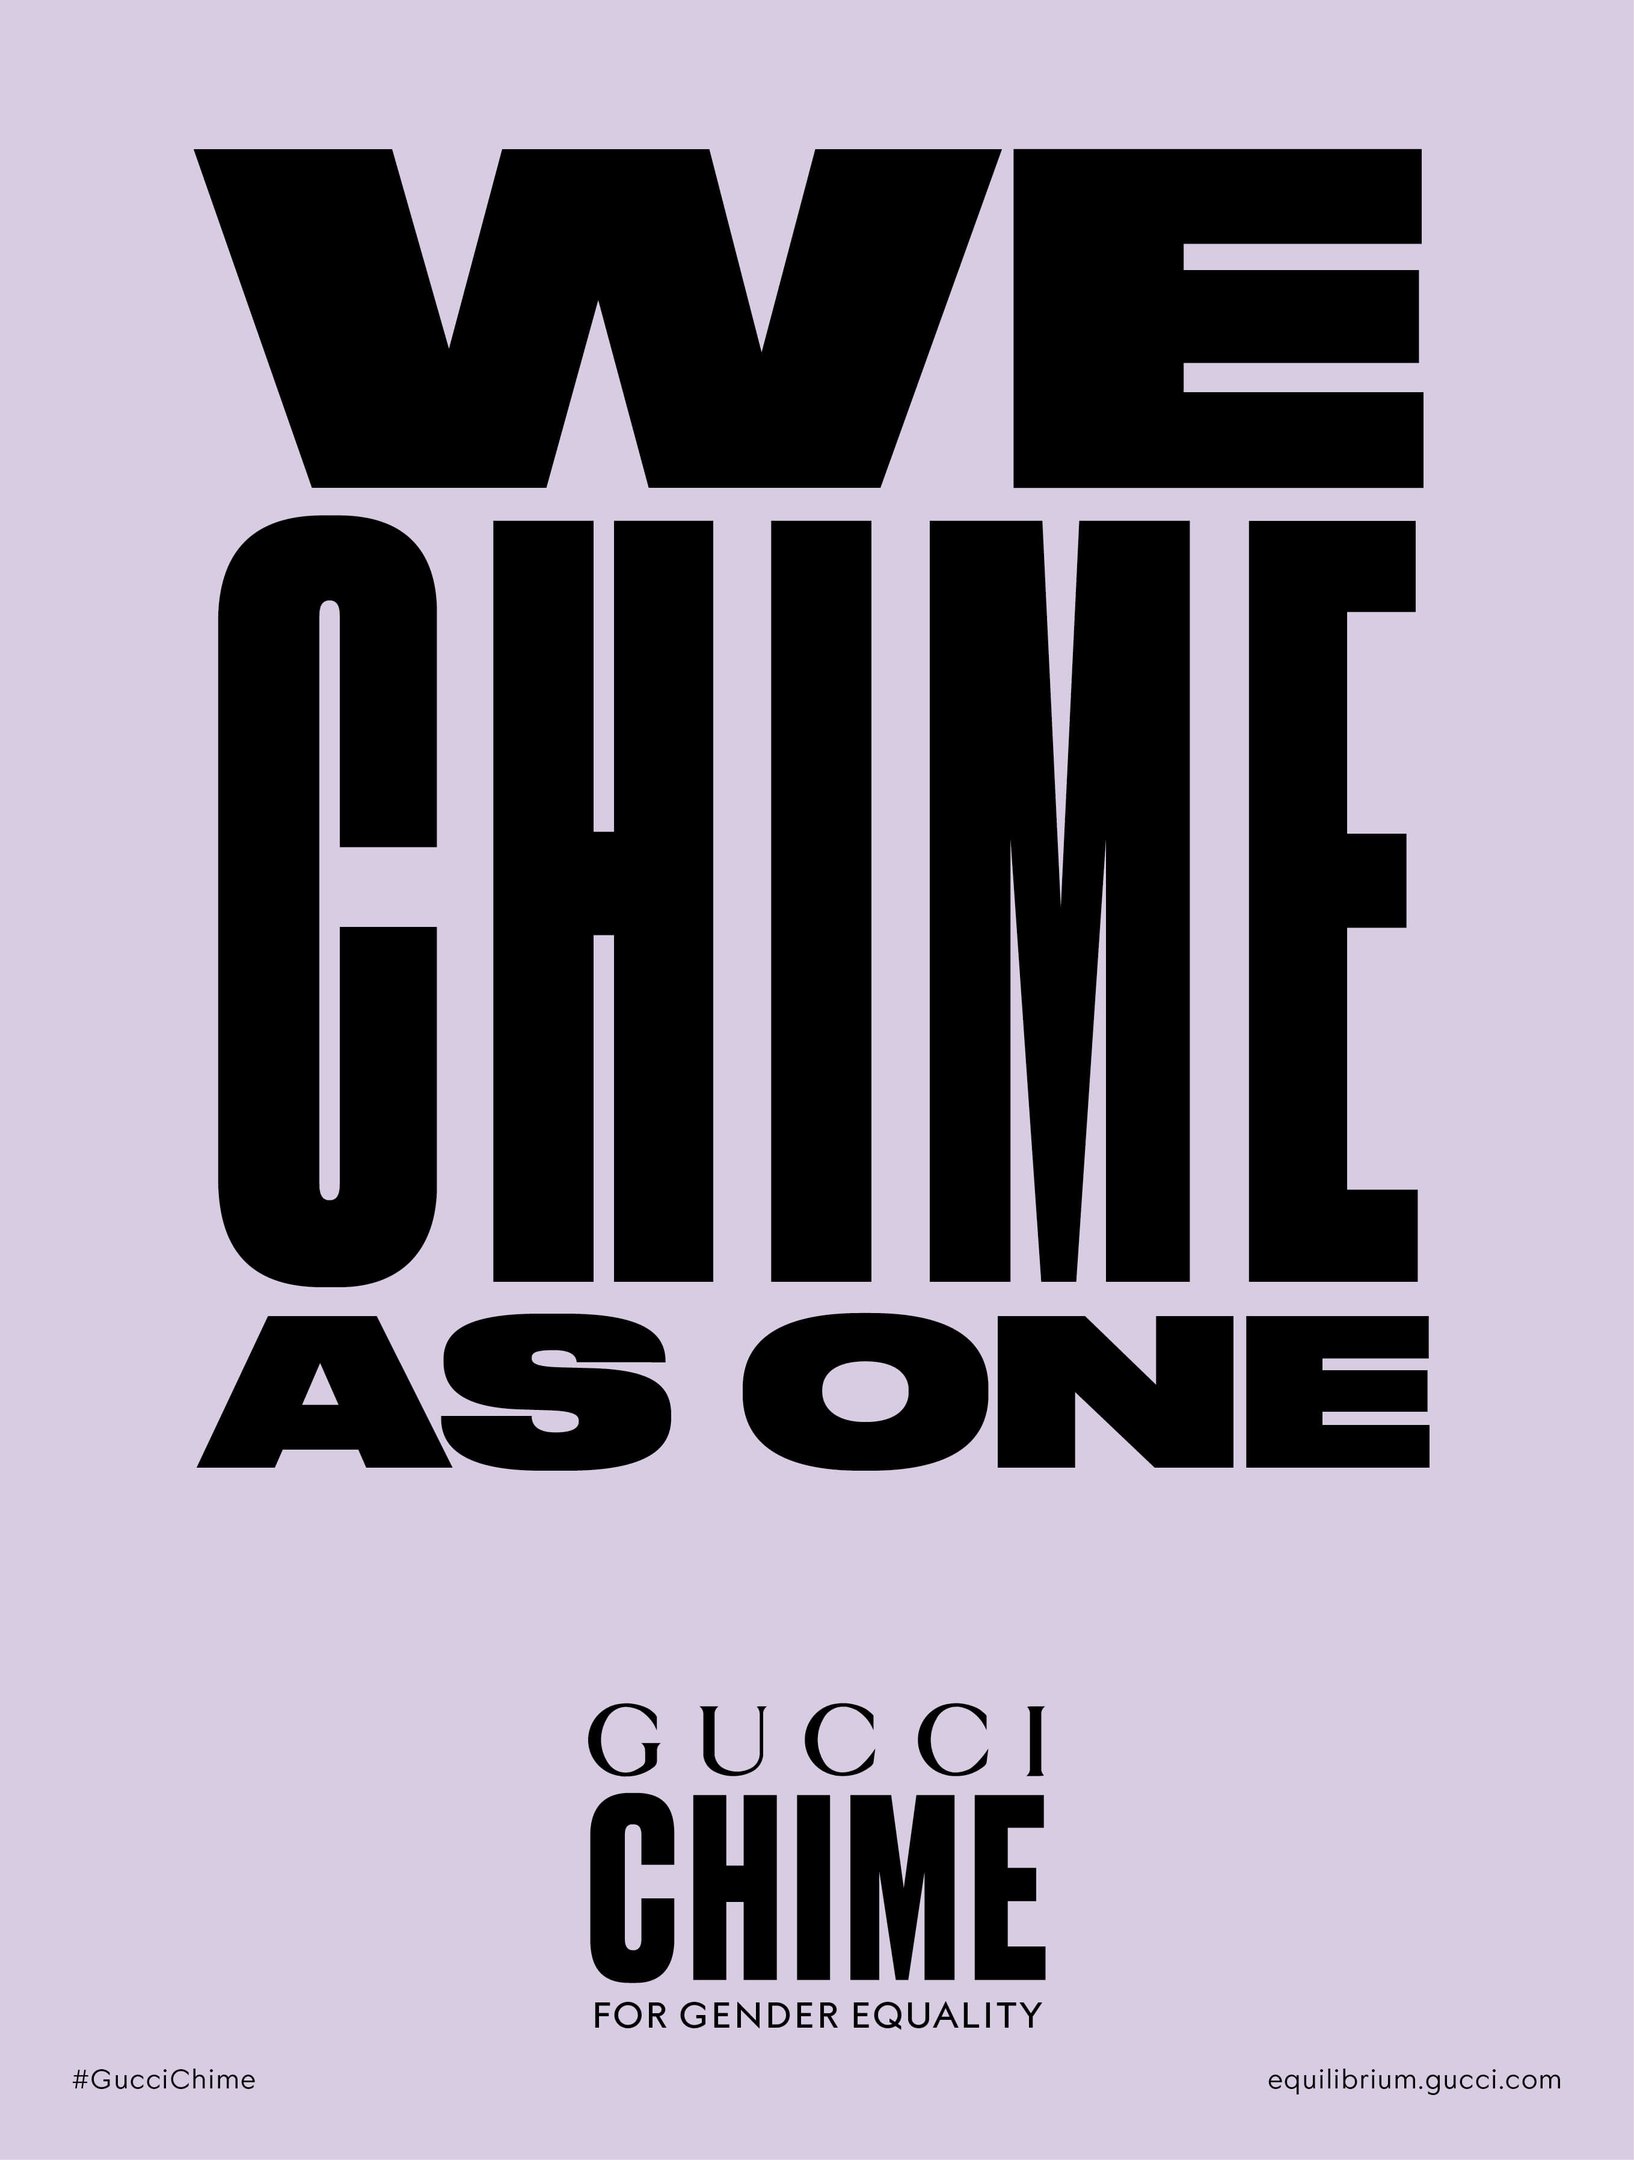 Gucci Chime -     - Gucci Chime - outono - texto preto em fundo roxo - https://stealthelook.com.br